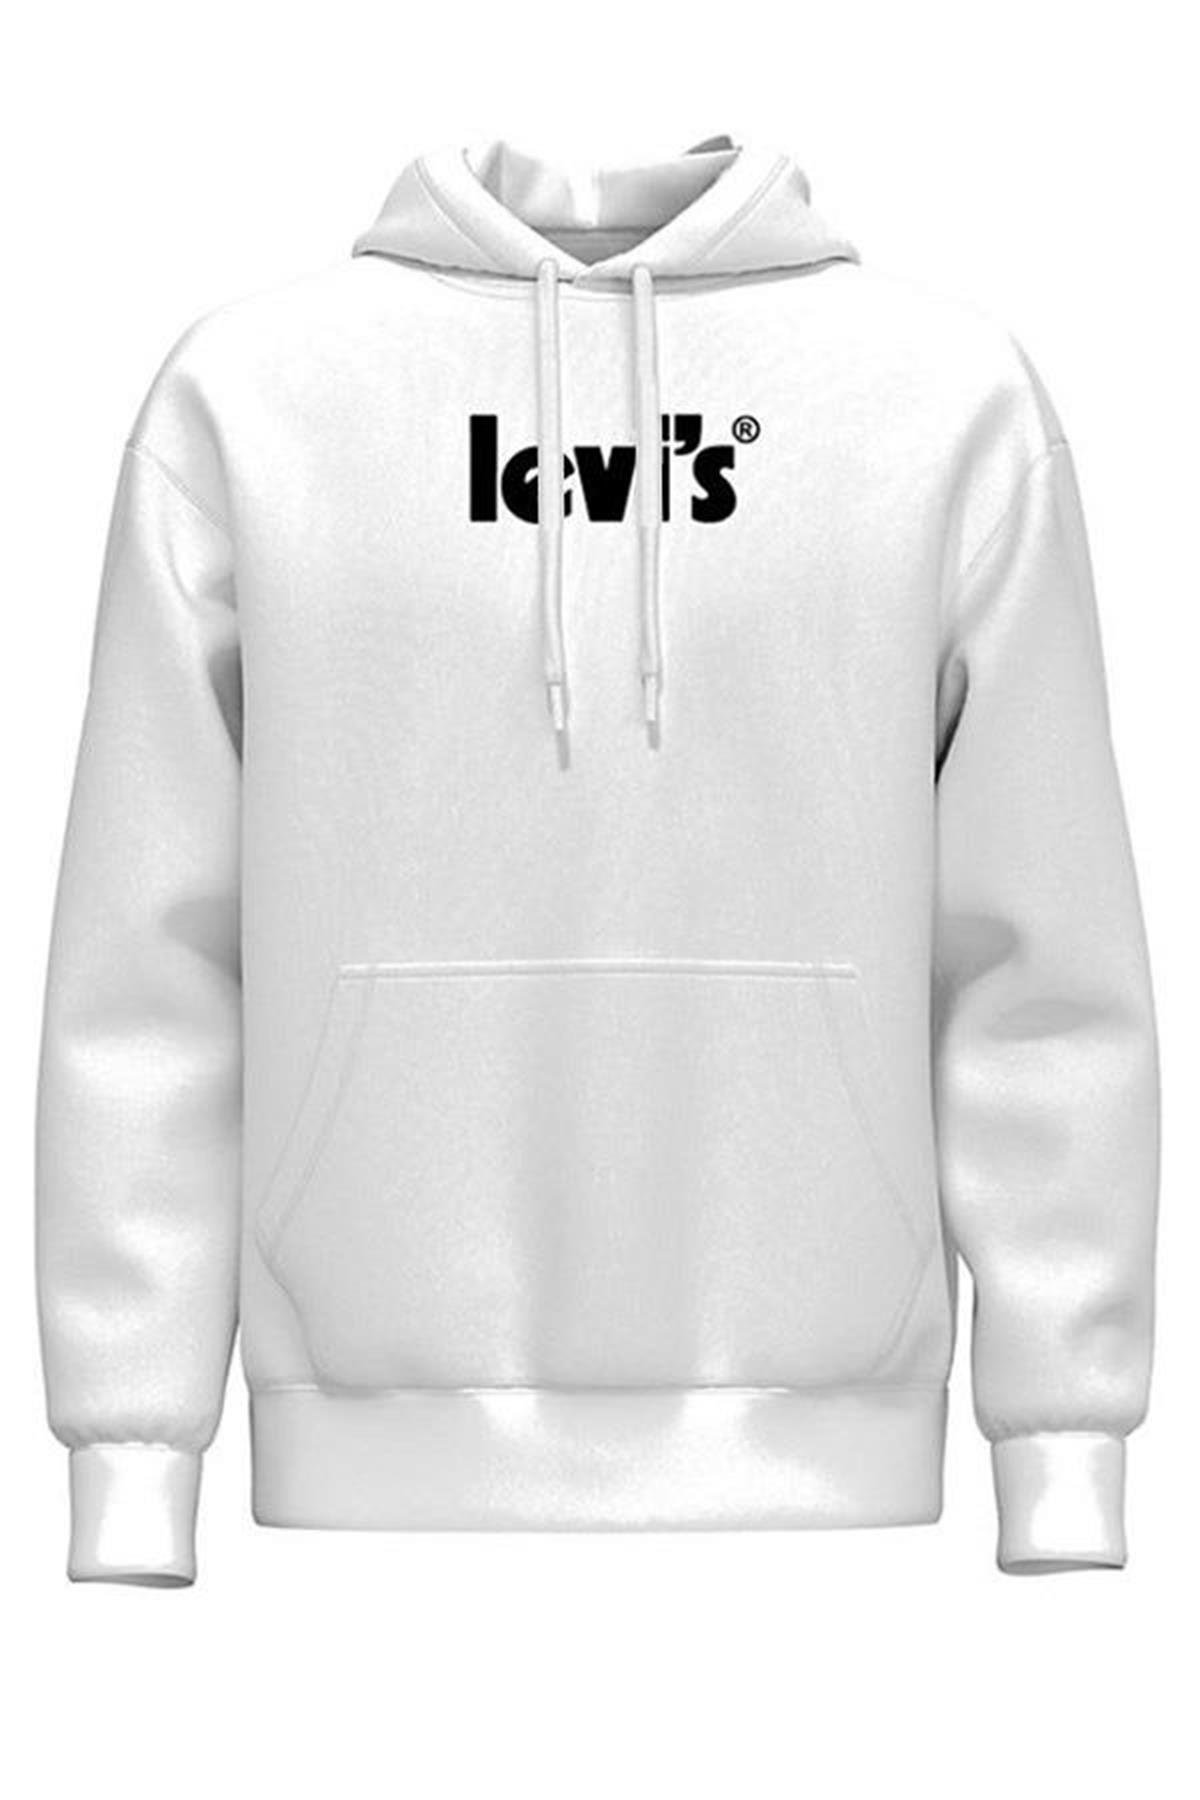 Levi's Erkek Beyaz Kapüşonlu Sweatshirt - A2639-0002 | varlikstore.com